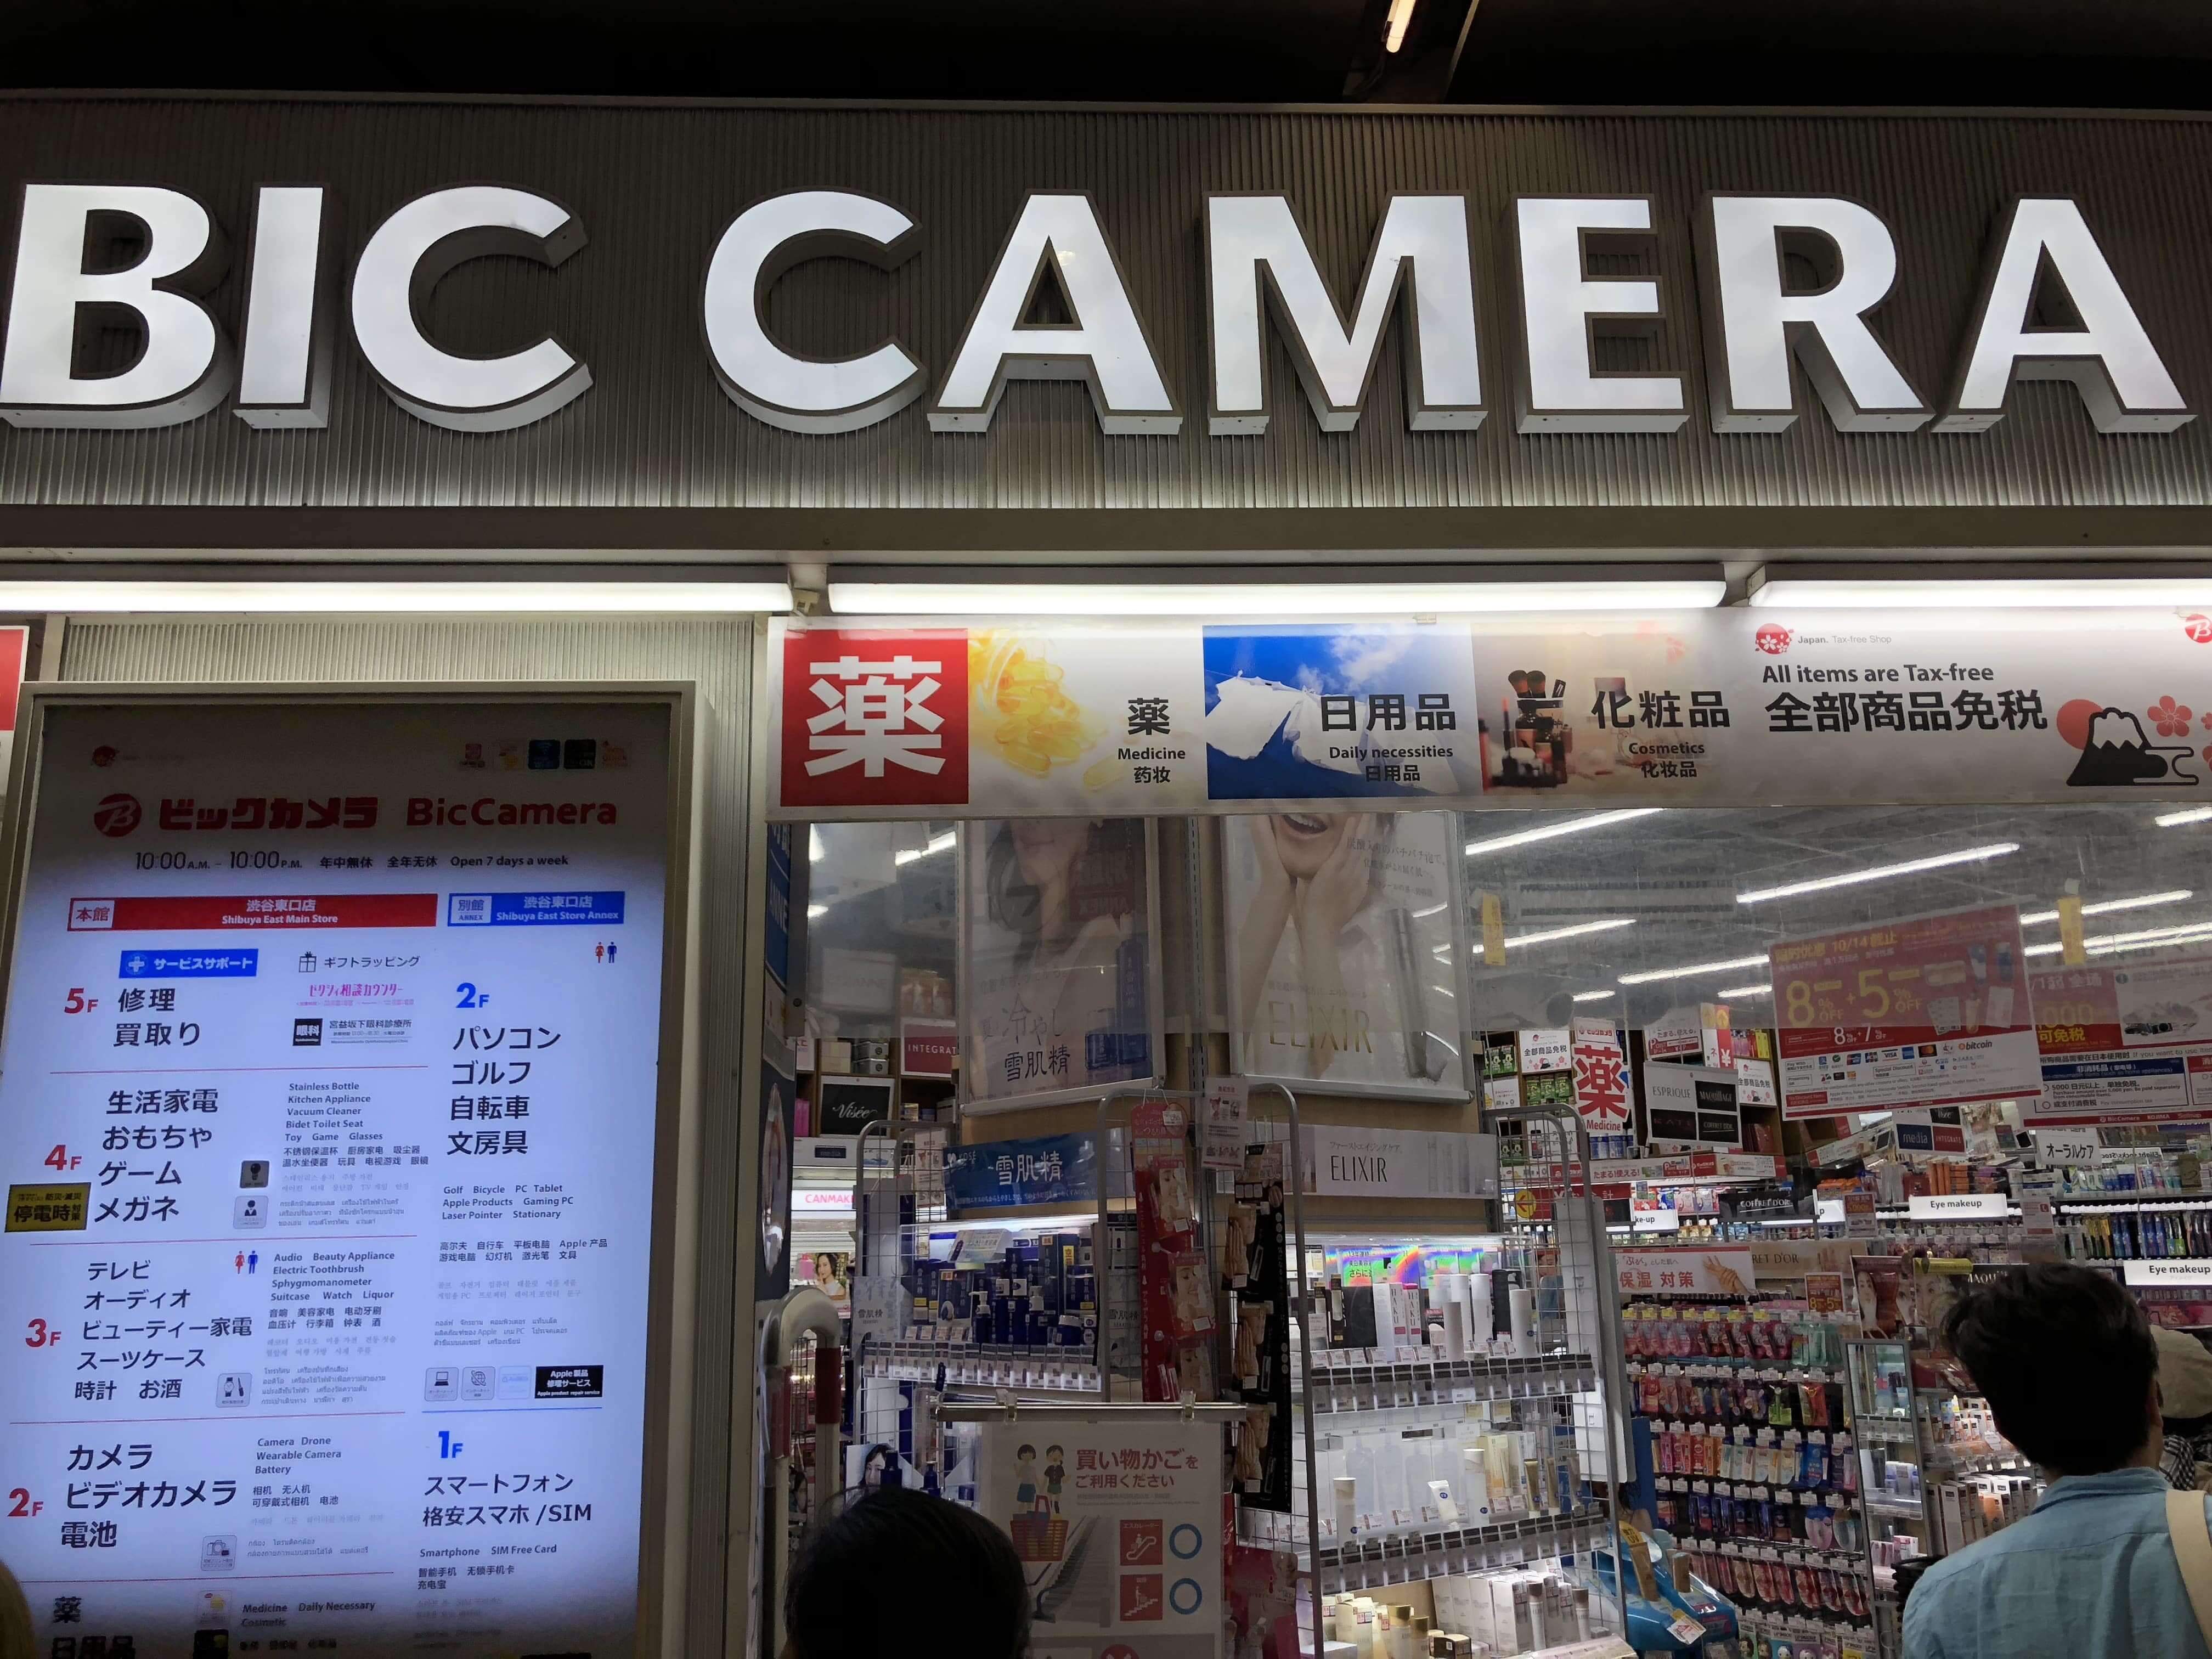 Bic Camera in Shibuya